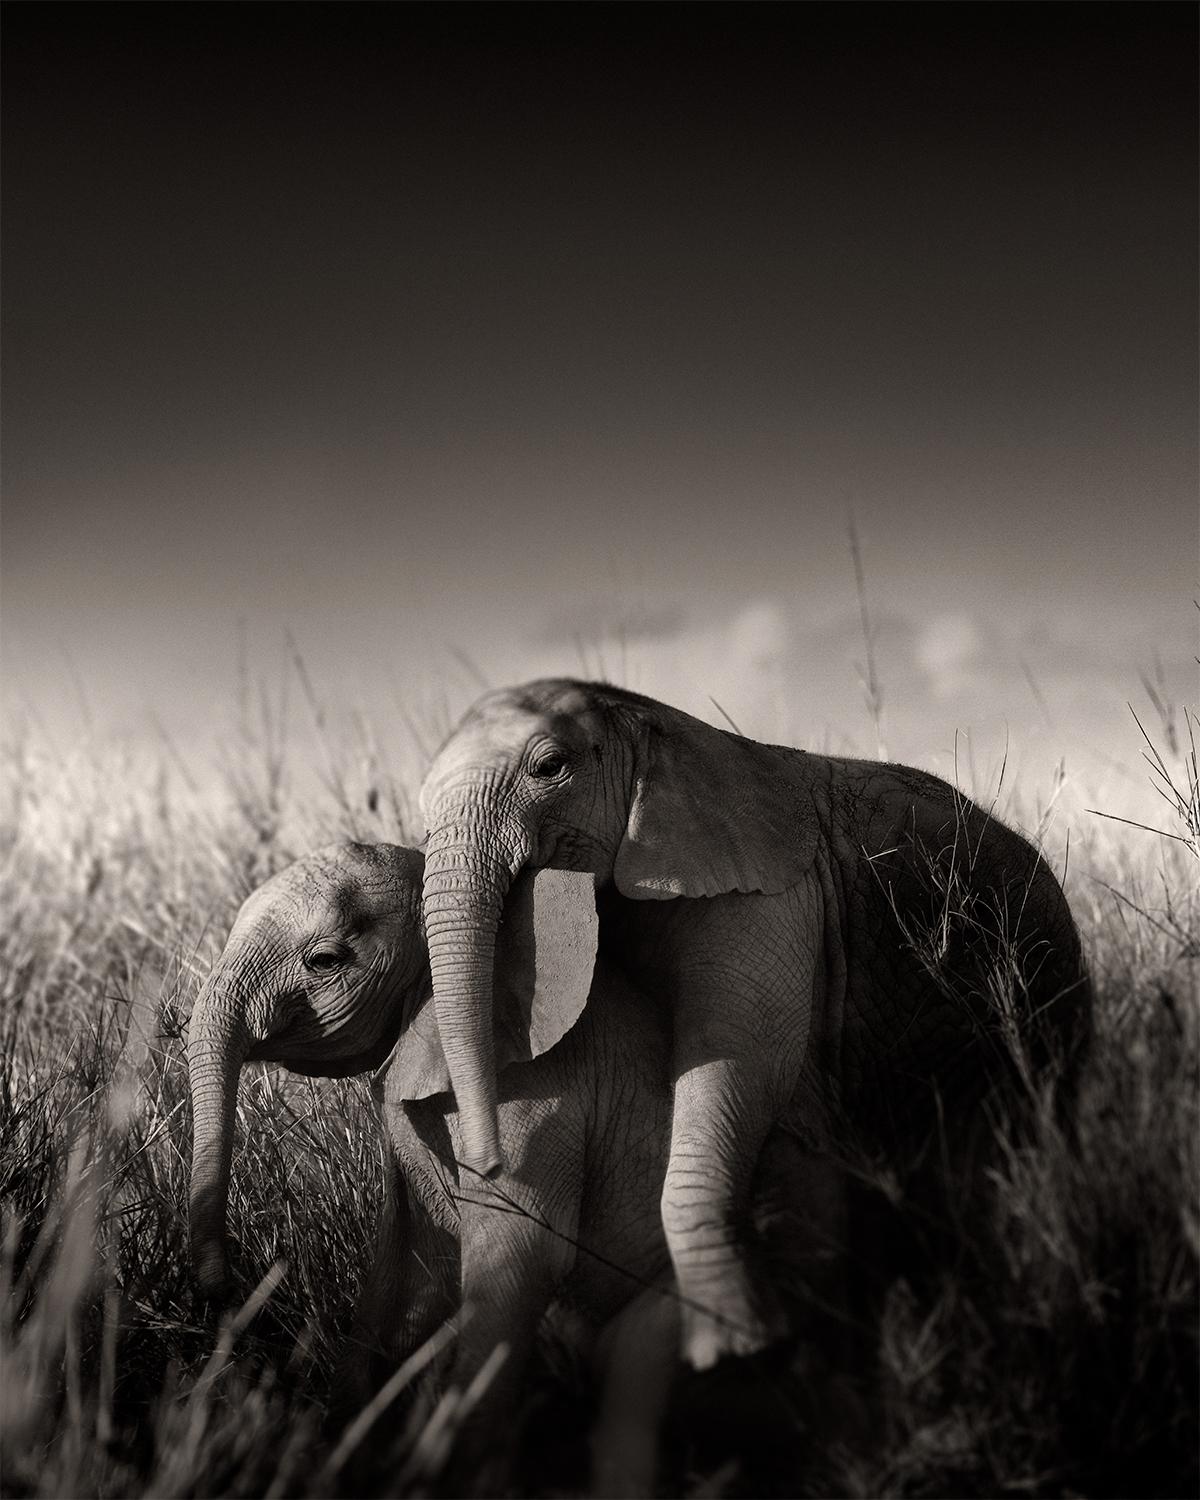 Joachim Schmeisser Landscape Photograph - Wild elephant babies playing IV, animal, wildlife, black and white photography